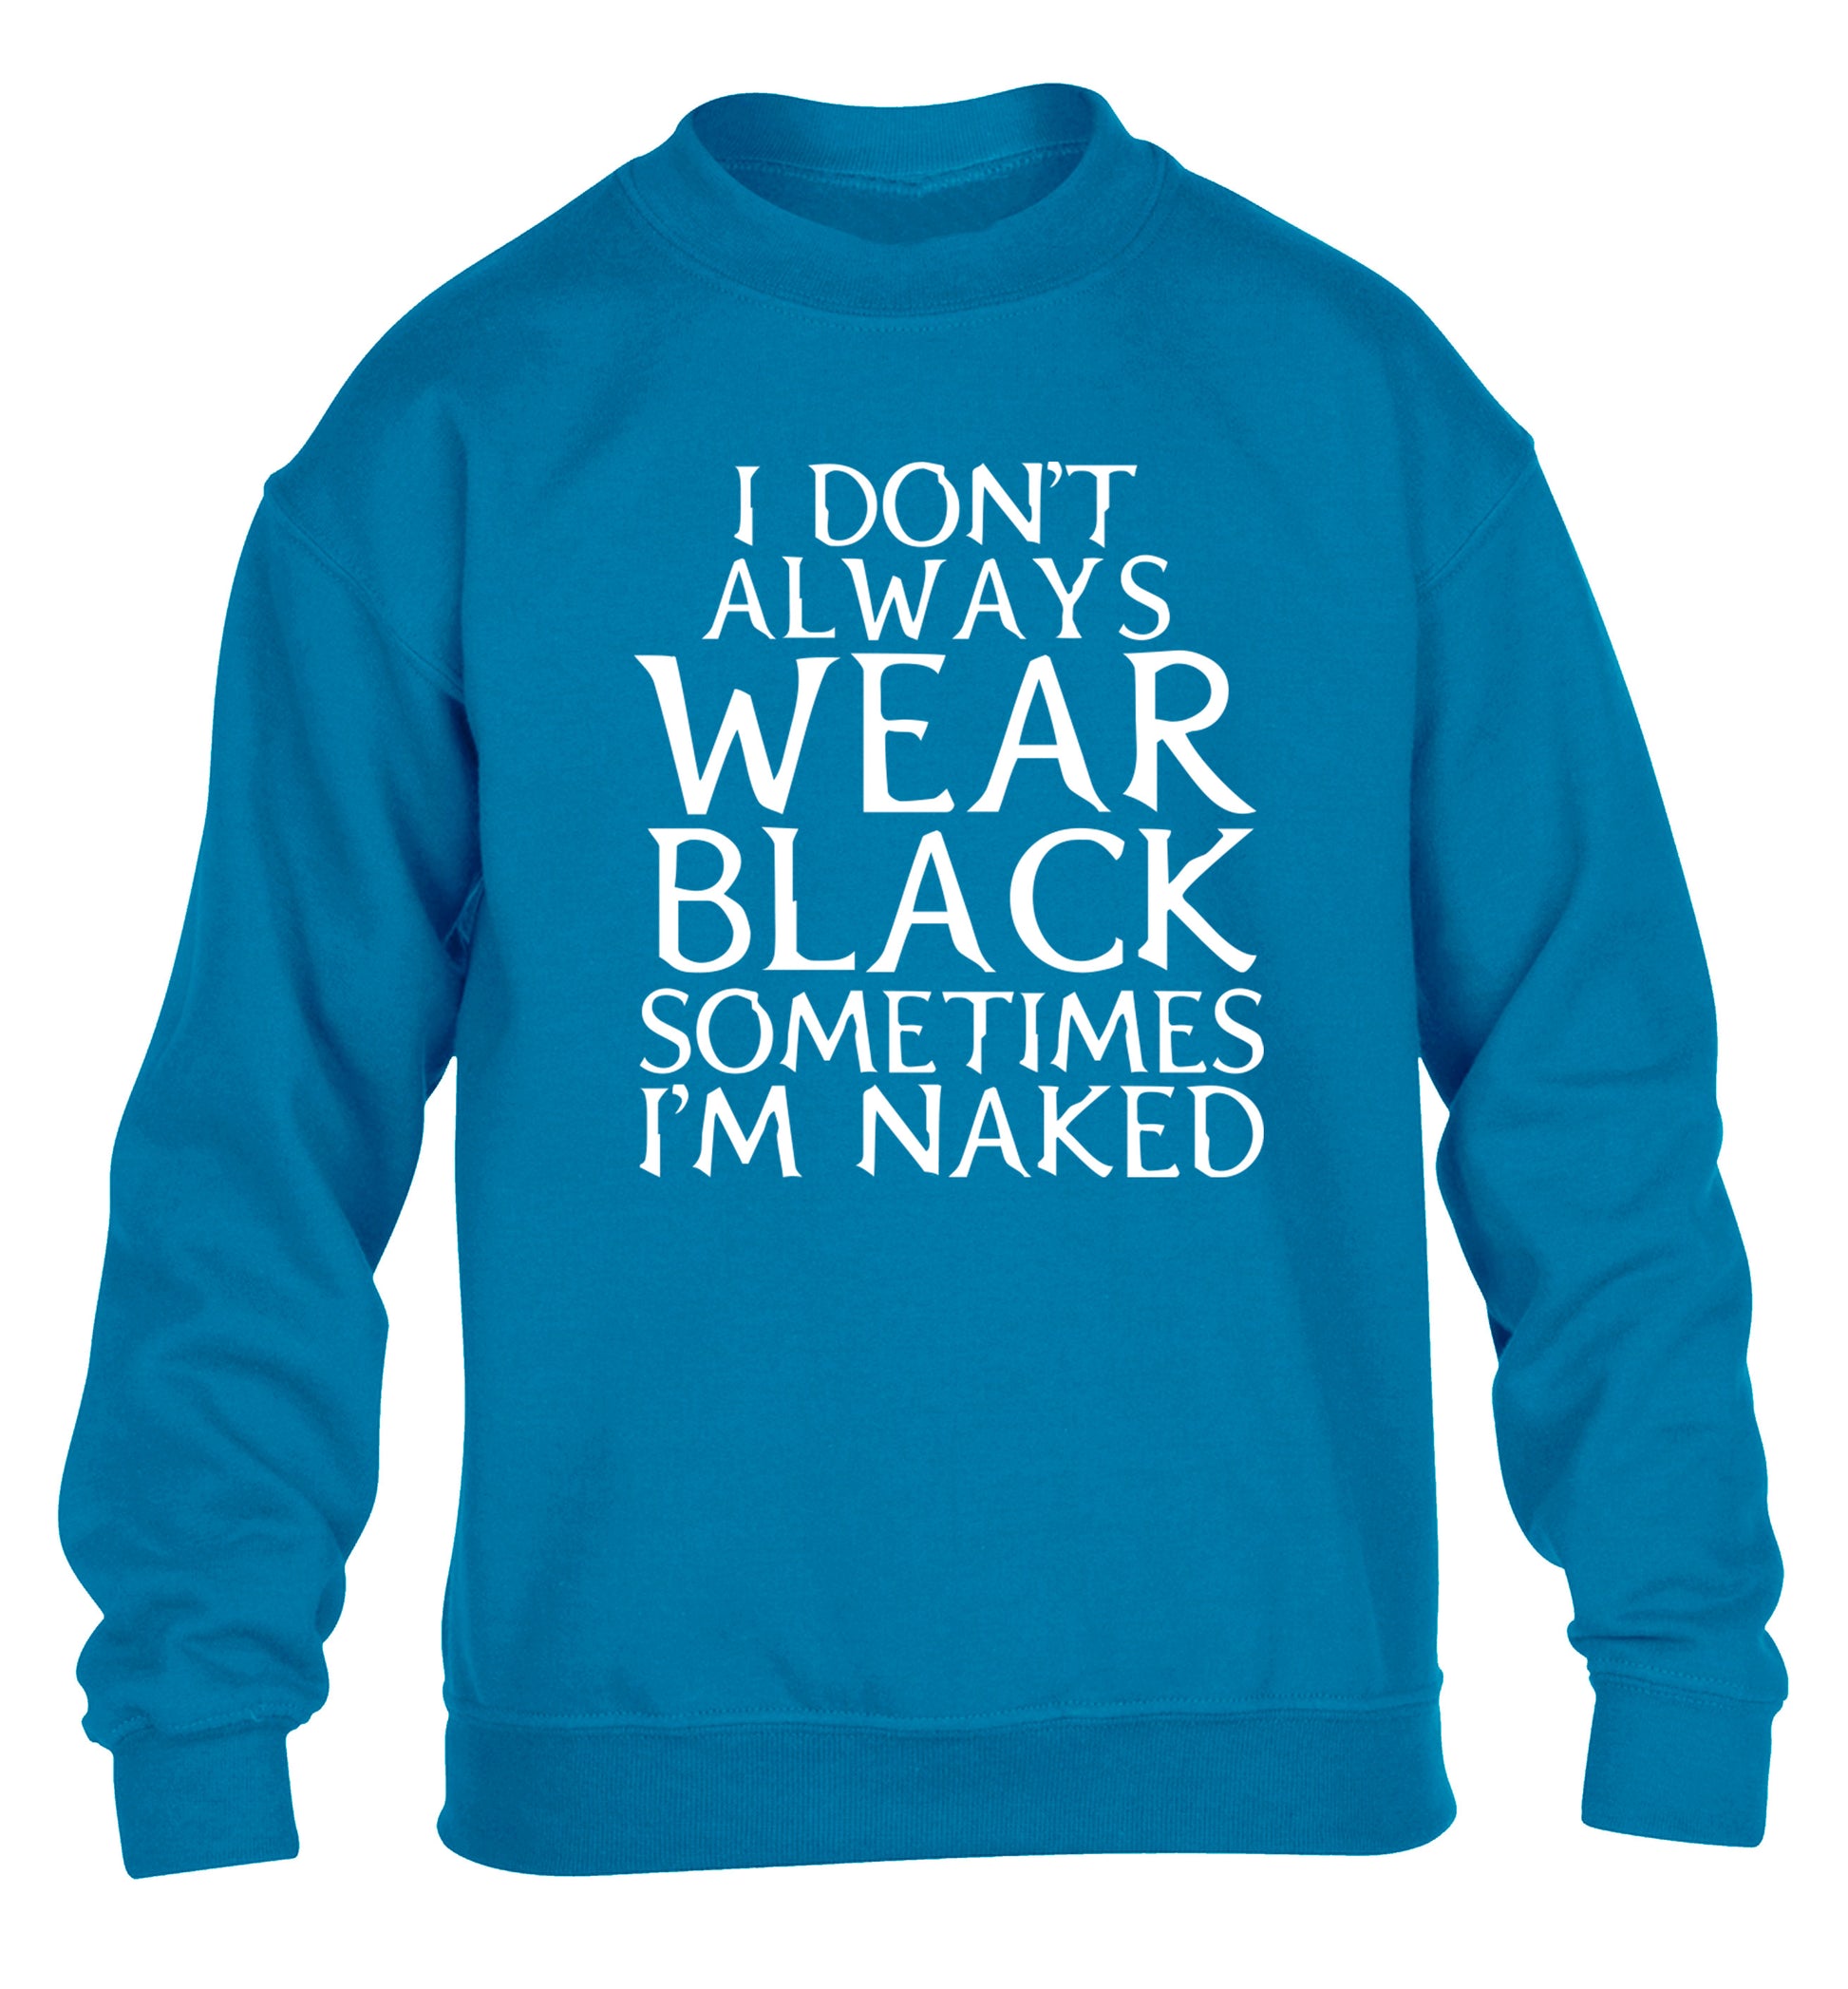 I don't always wear black sometimes I'm naked children's blue sweater 12-13 Years